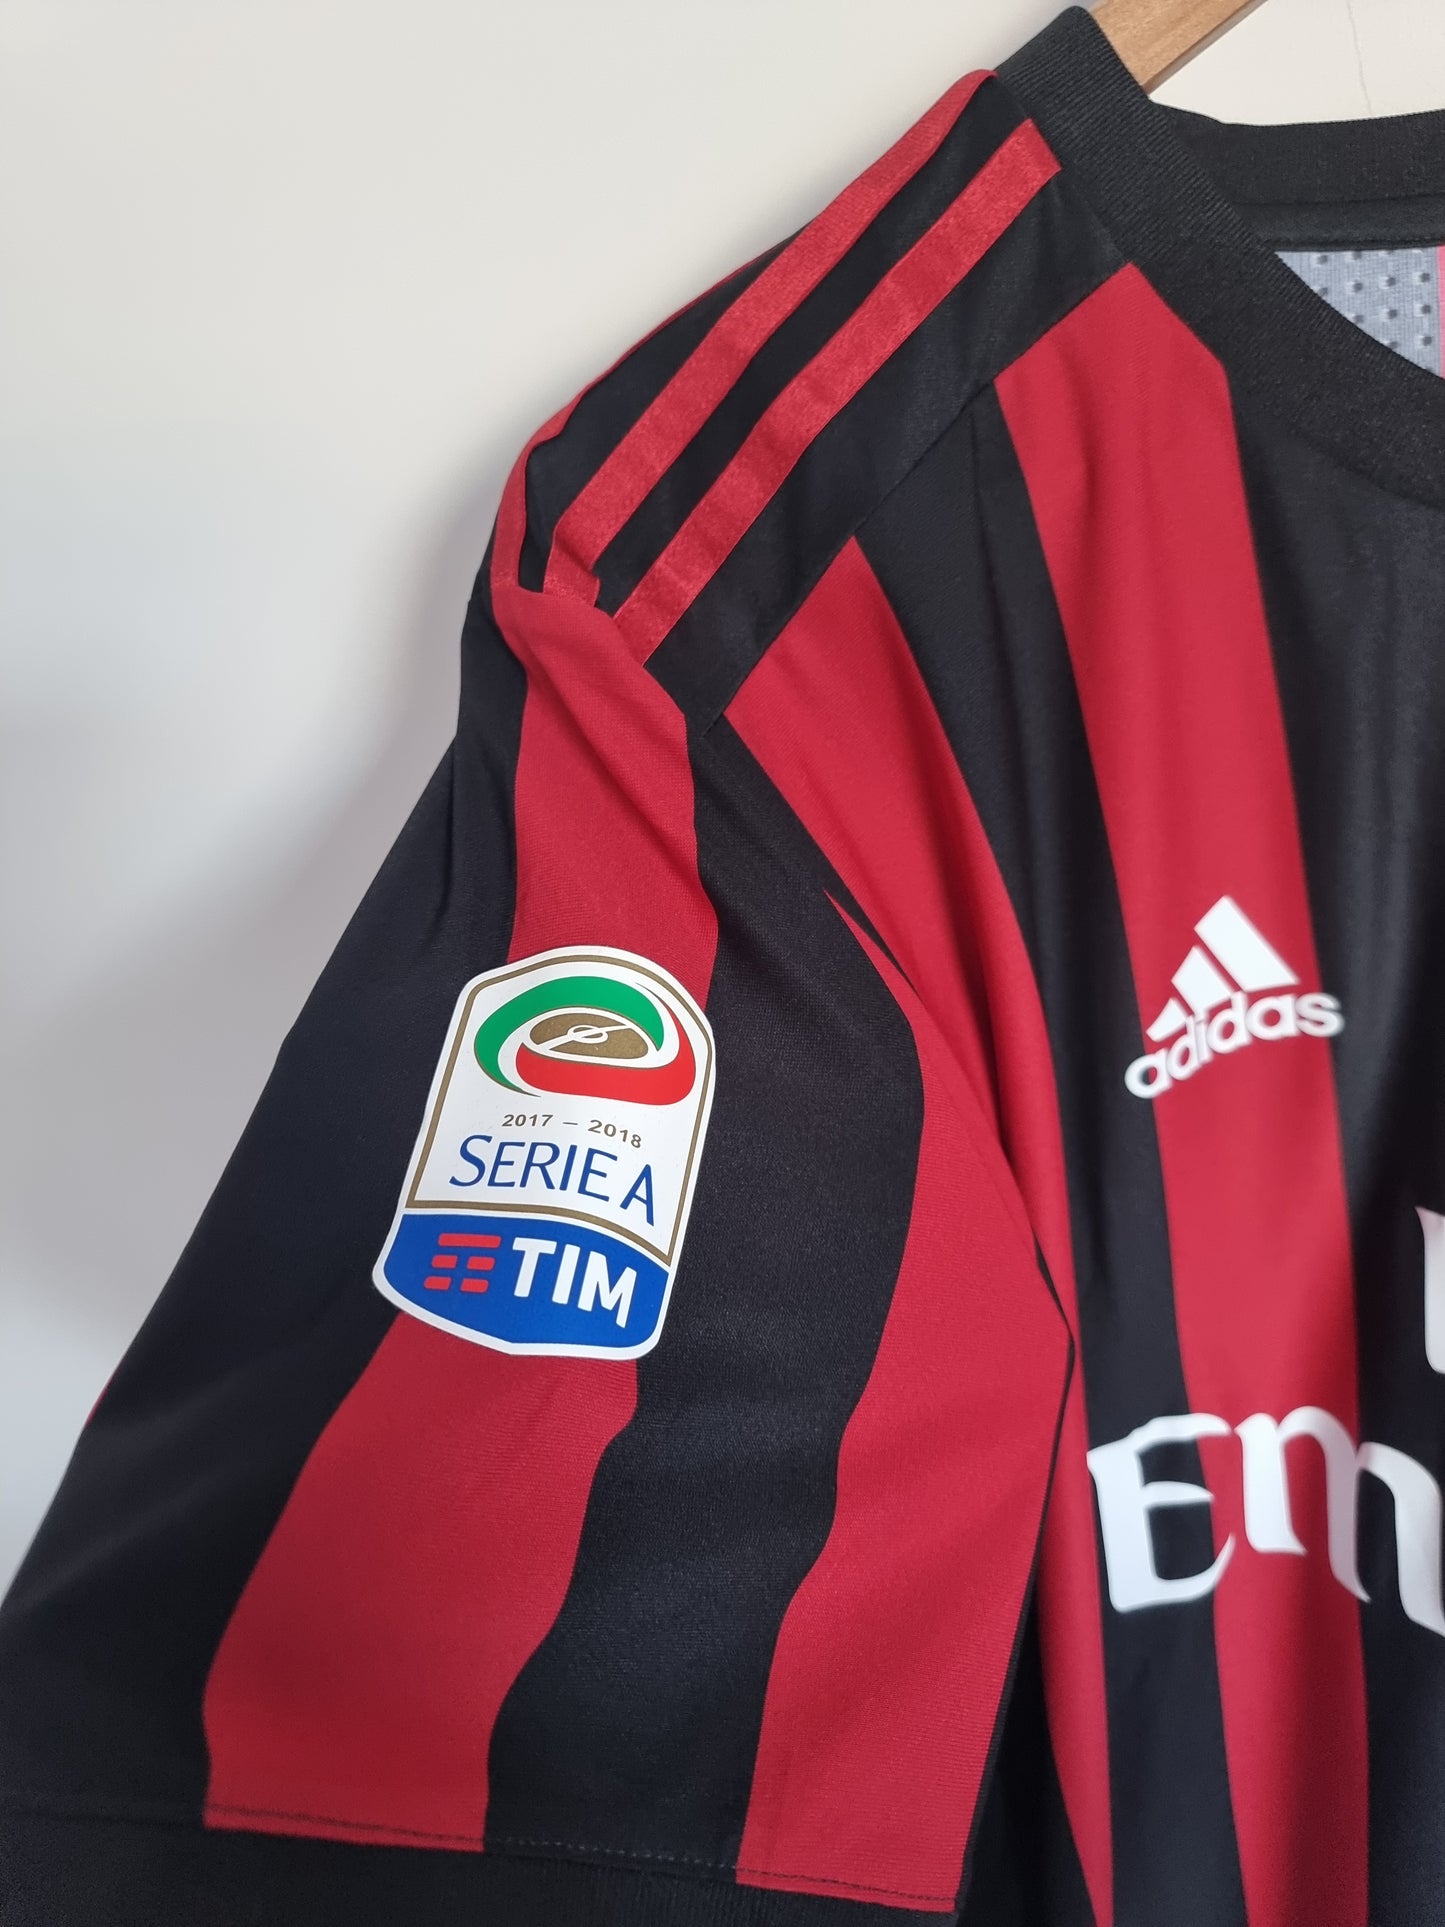 Adidas AC Milan 17/18 'Bonucci 19' Player Issue Home Shirt 10